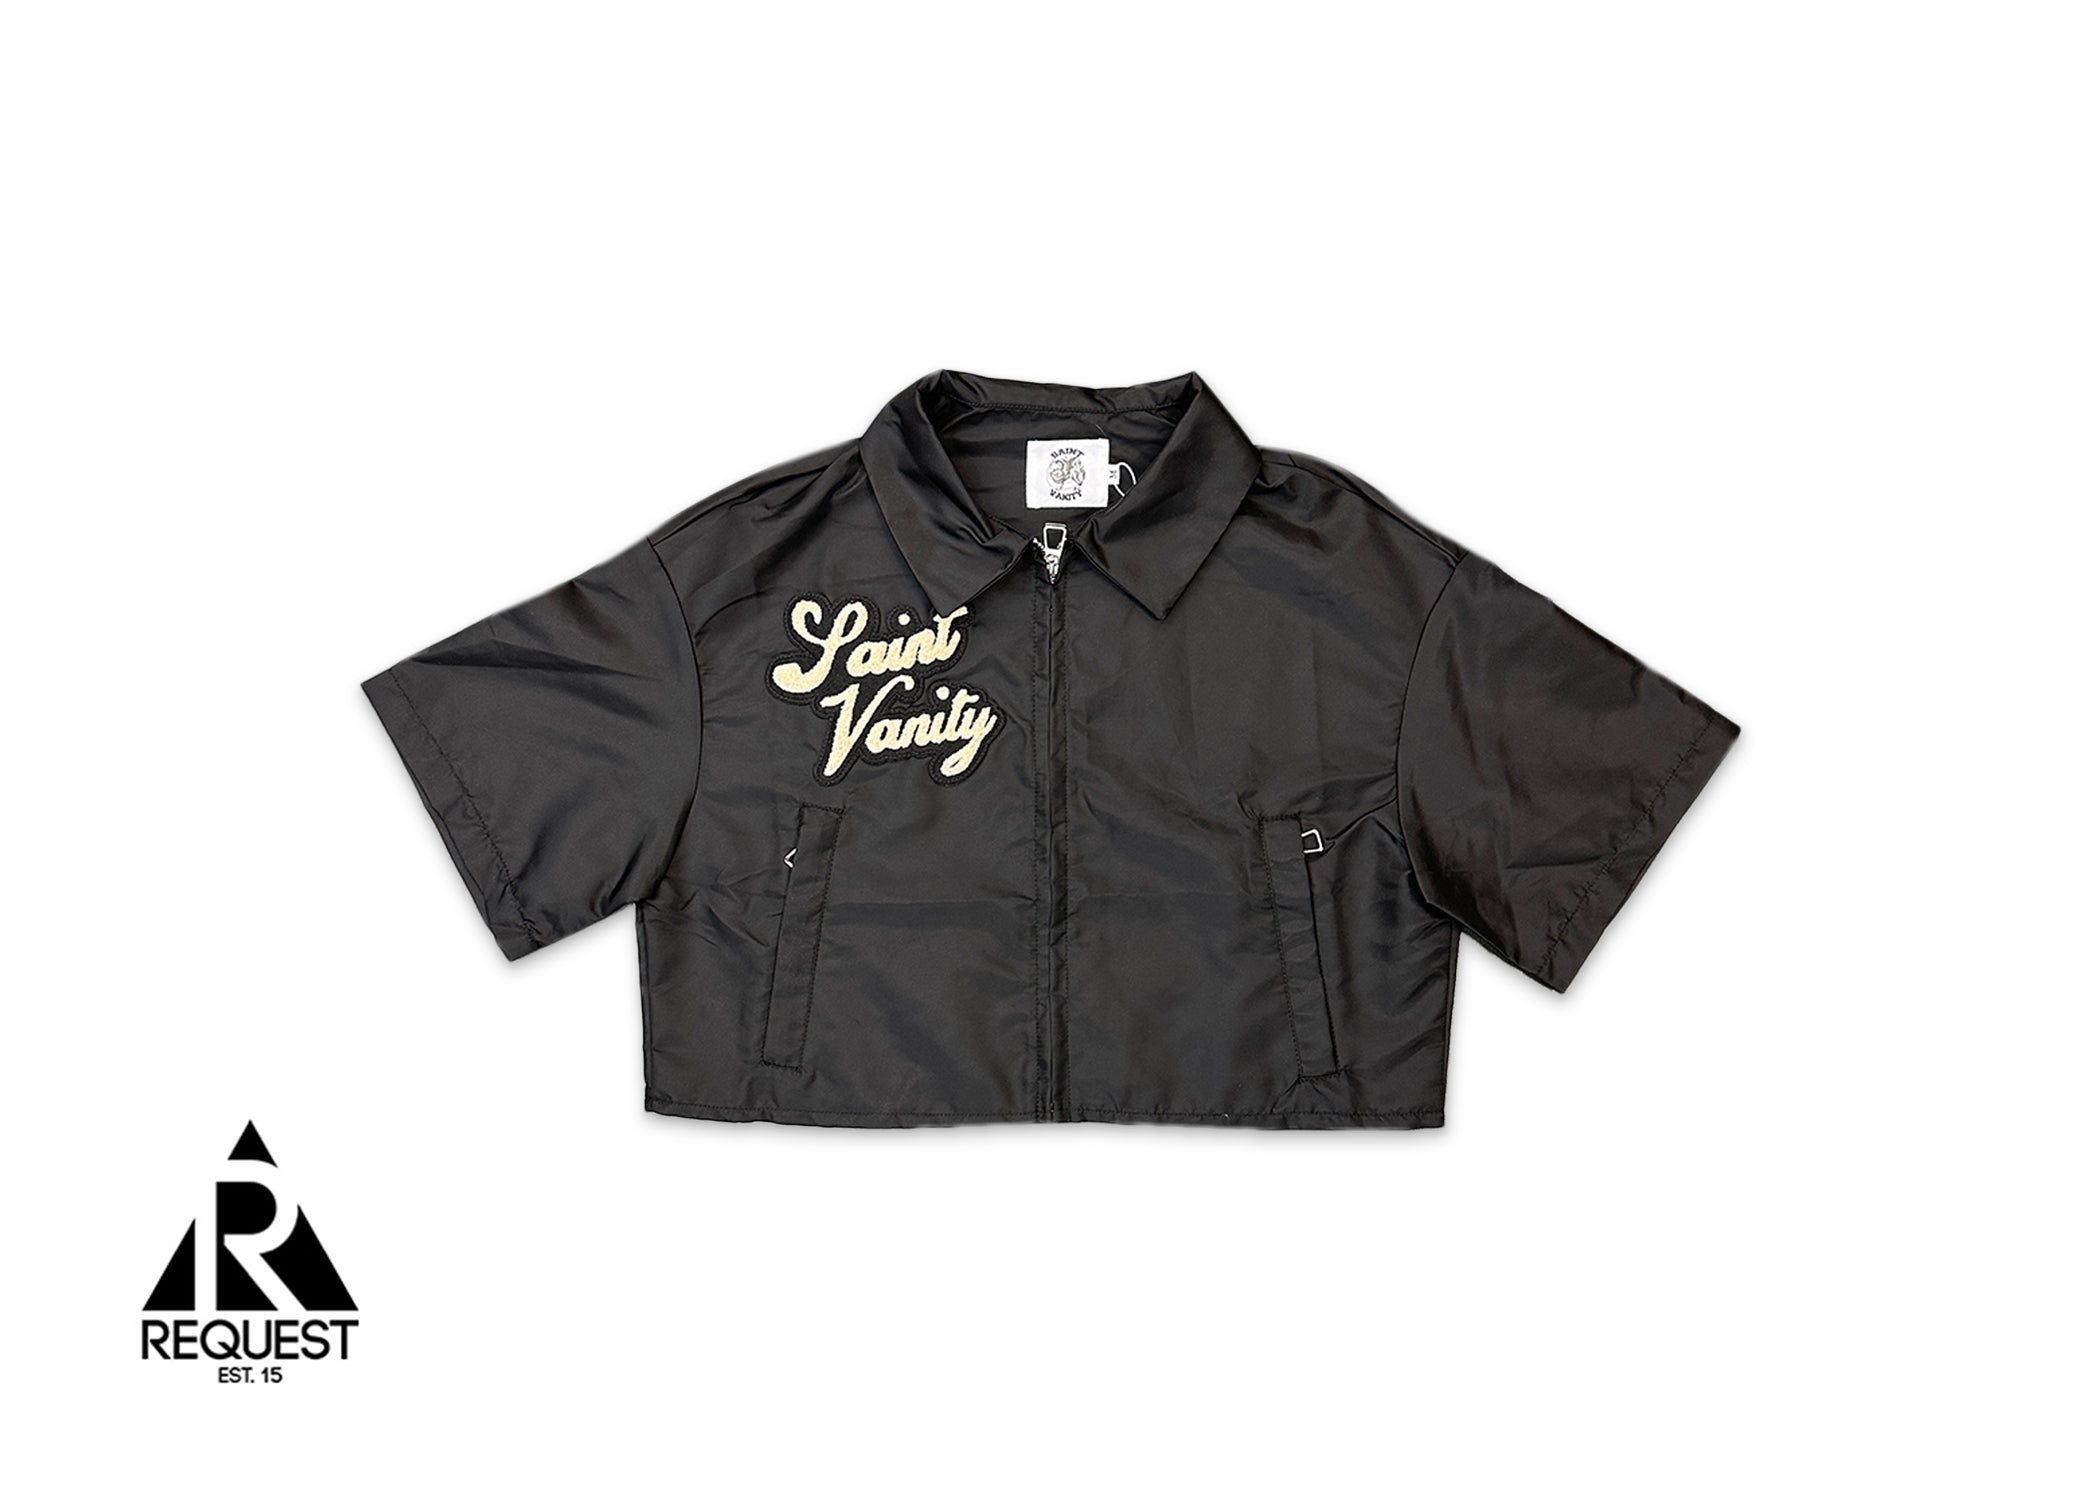 Saint Vanity Nylon Zip Up Cropped Shirt "Black" (W)